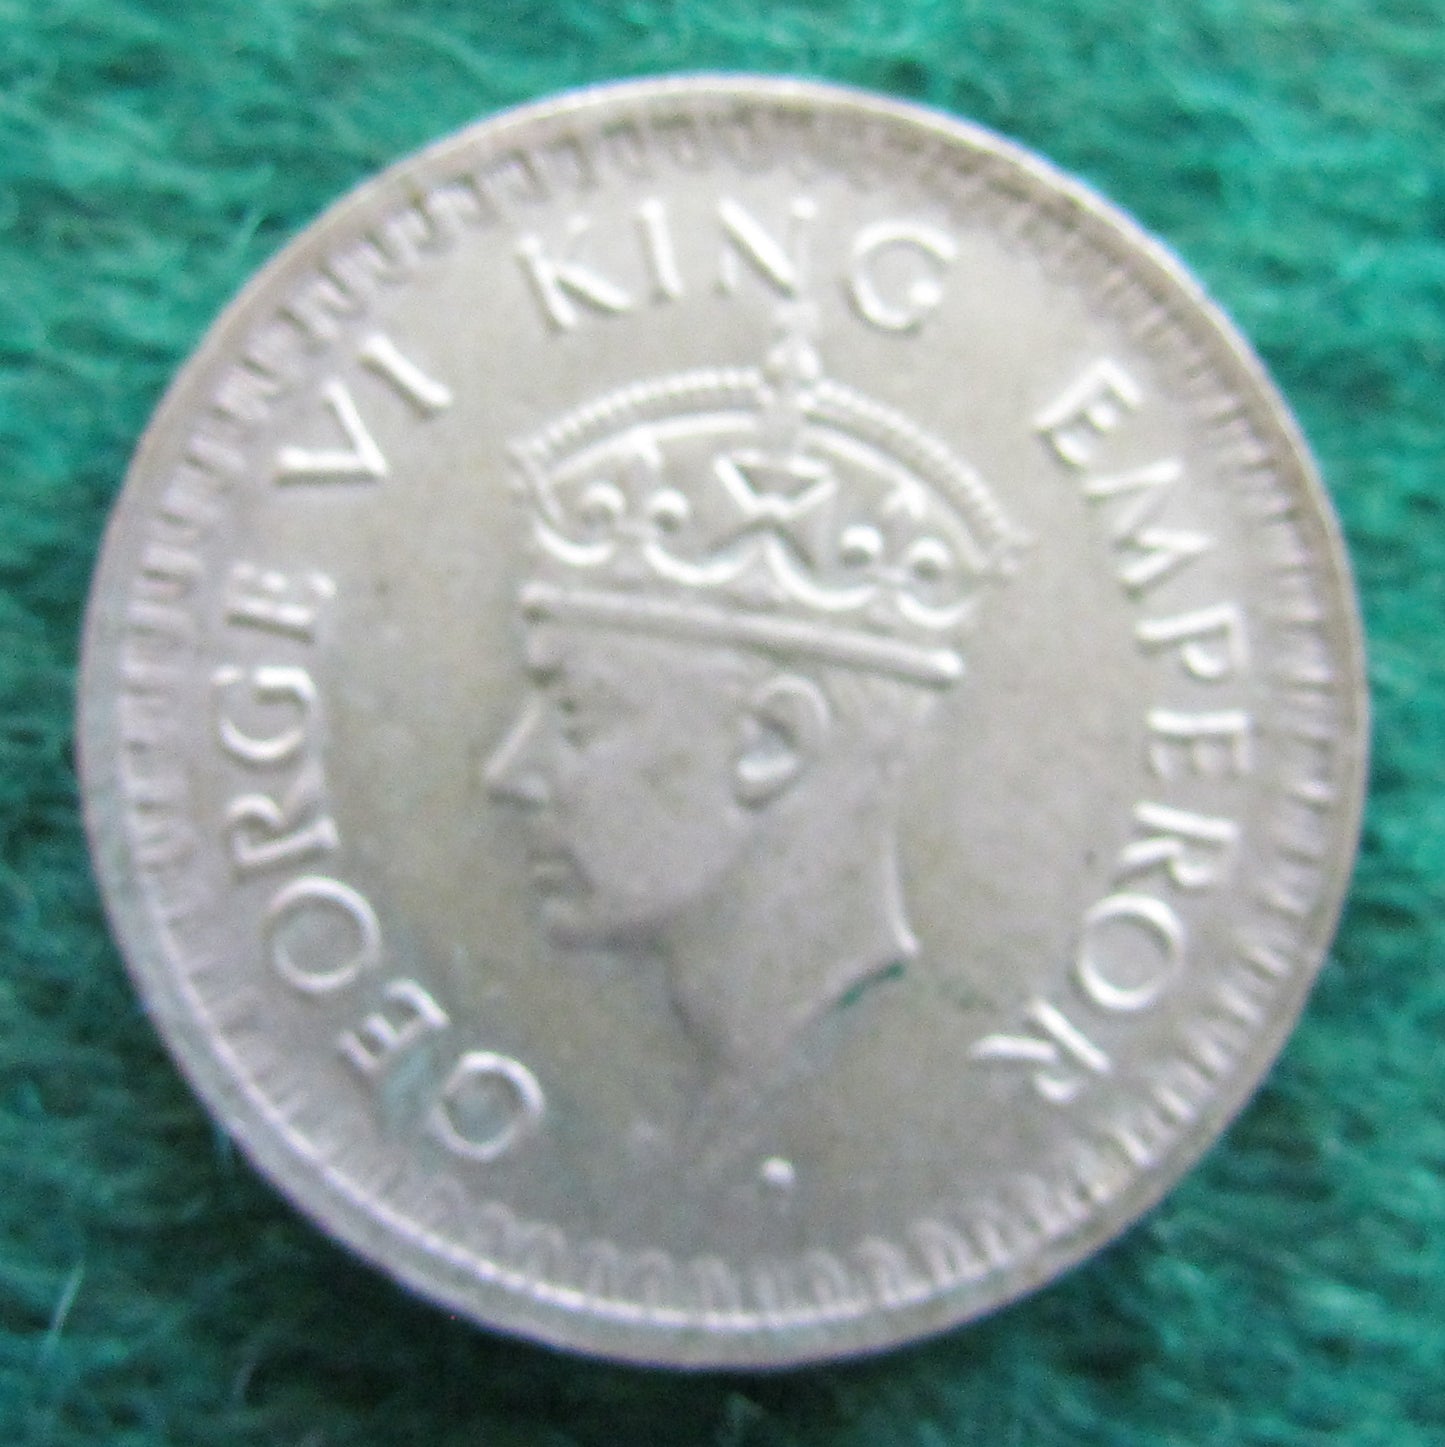 India 1944 Half 1/2 Rupee Coin